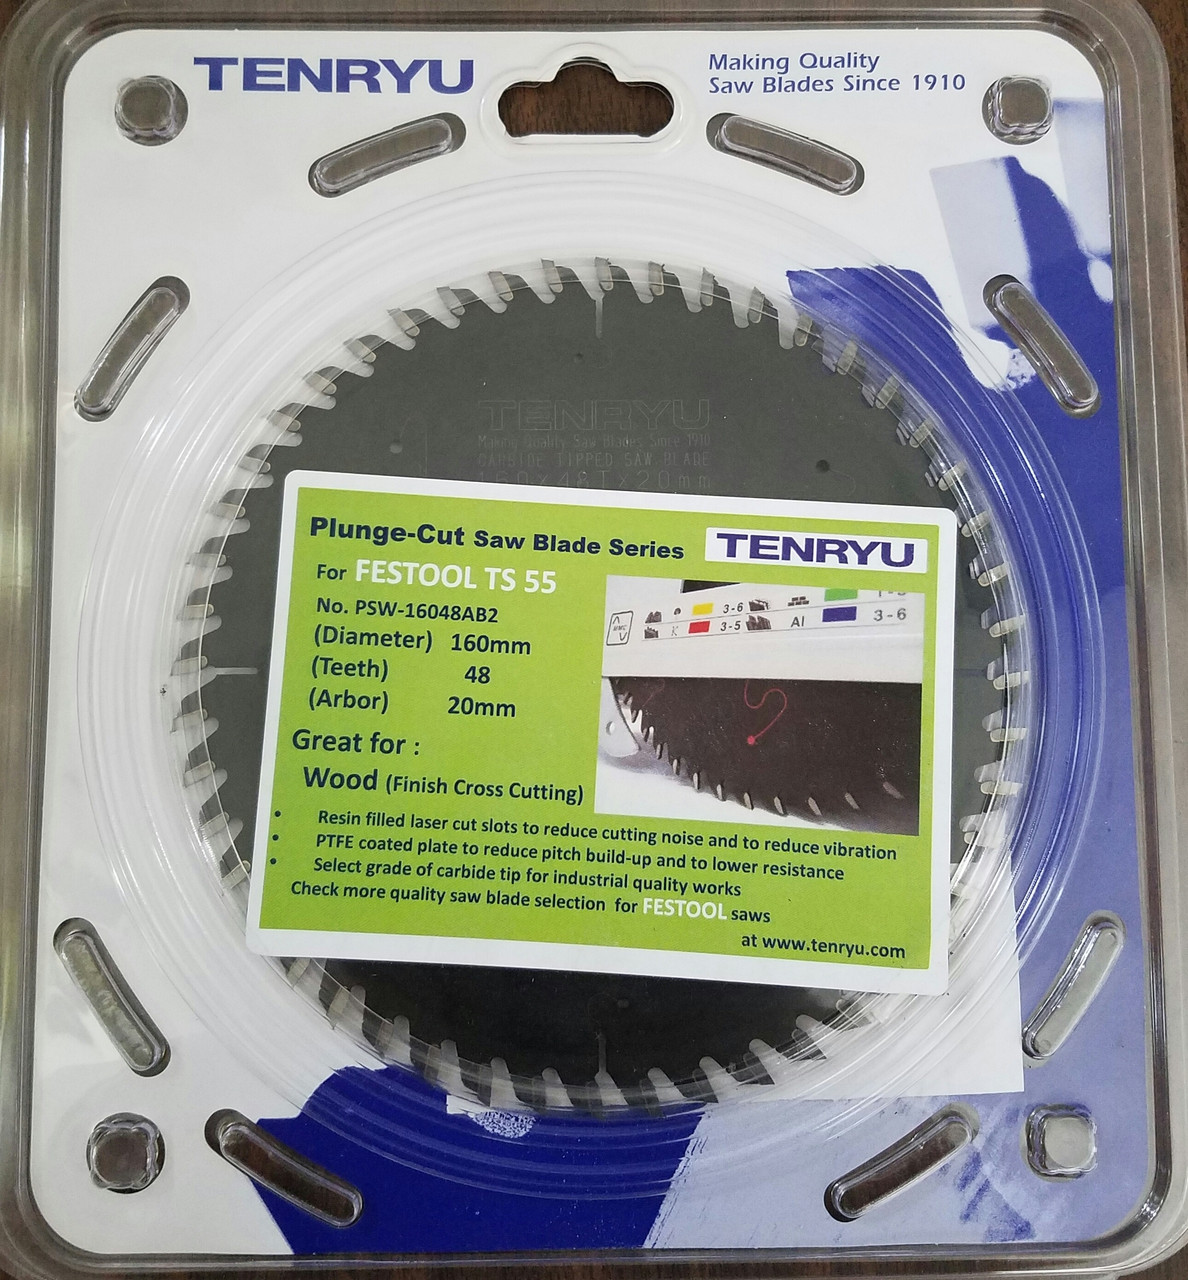 Tenryu PSW-16048AB2 Wood Fine Cross Cut (Fits Festool TS 55 Festool #495377)